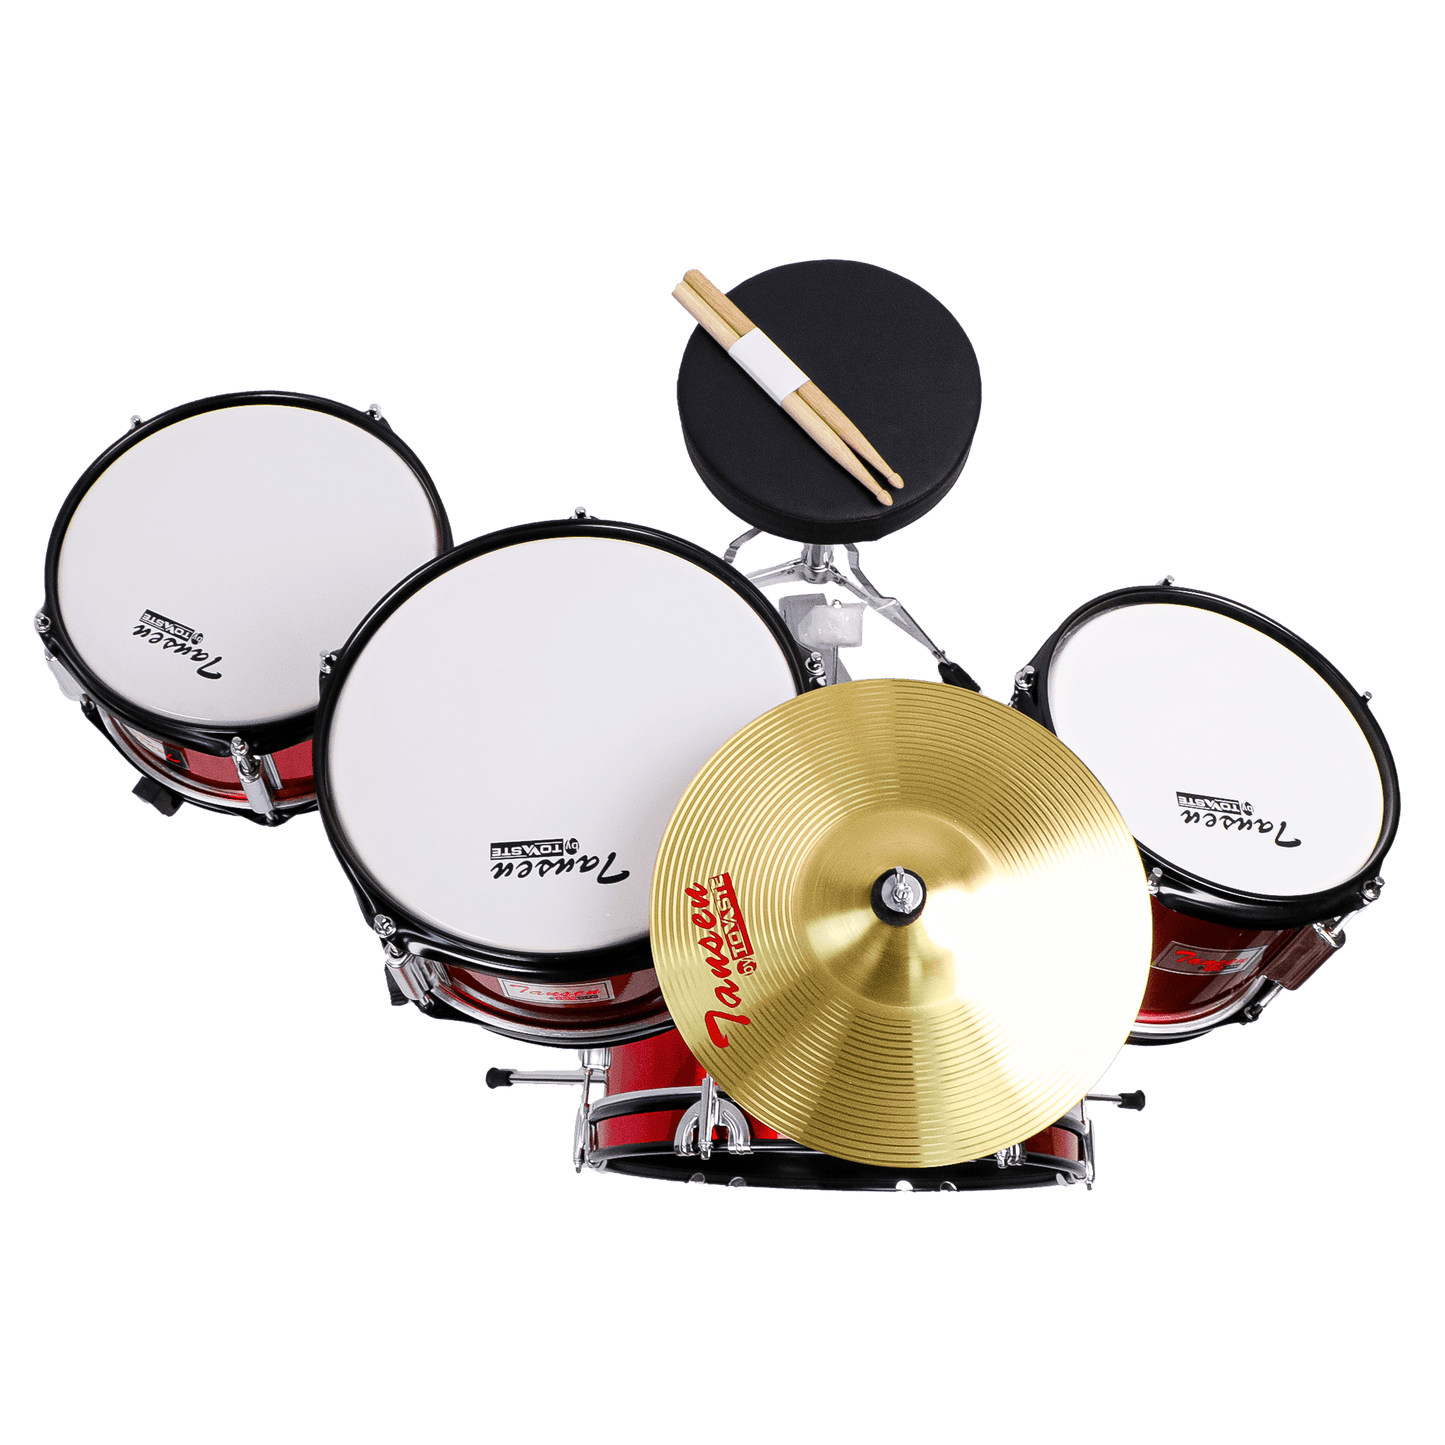 Tovaste J1043A Junior Drum Kit with Throne & Cymbal - MusicMajlis